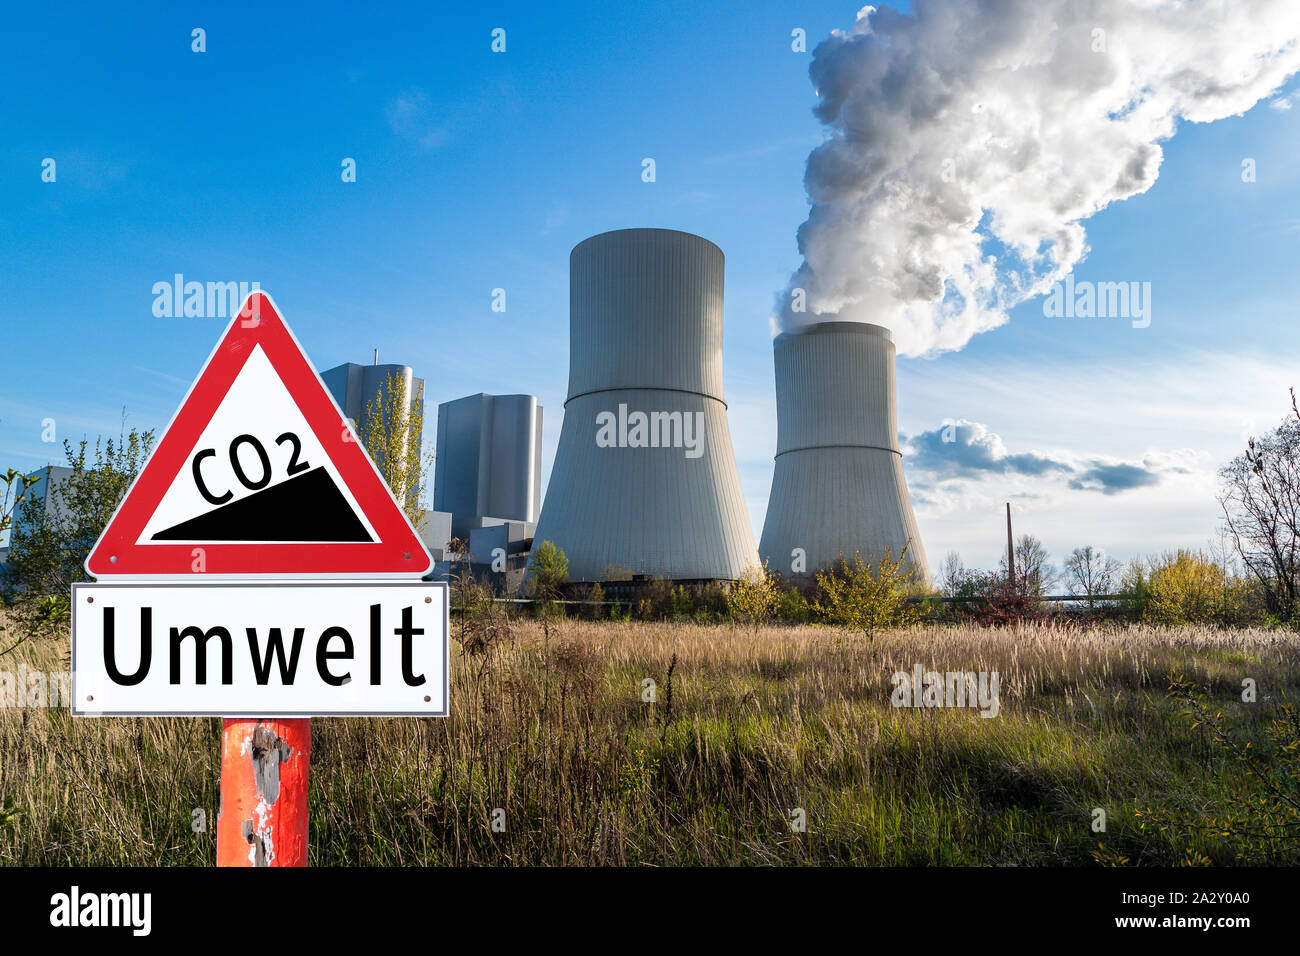 Environmental Protection Co2 warning sign Stock Photo